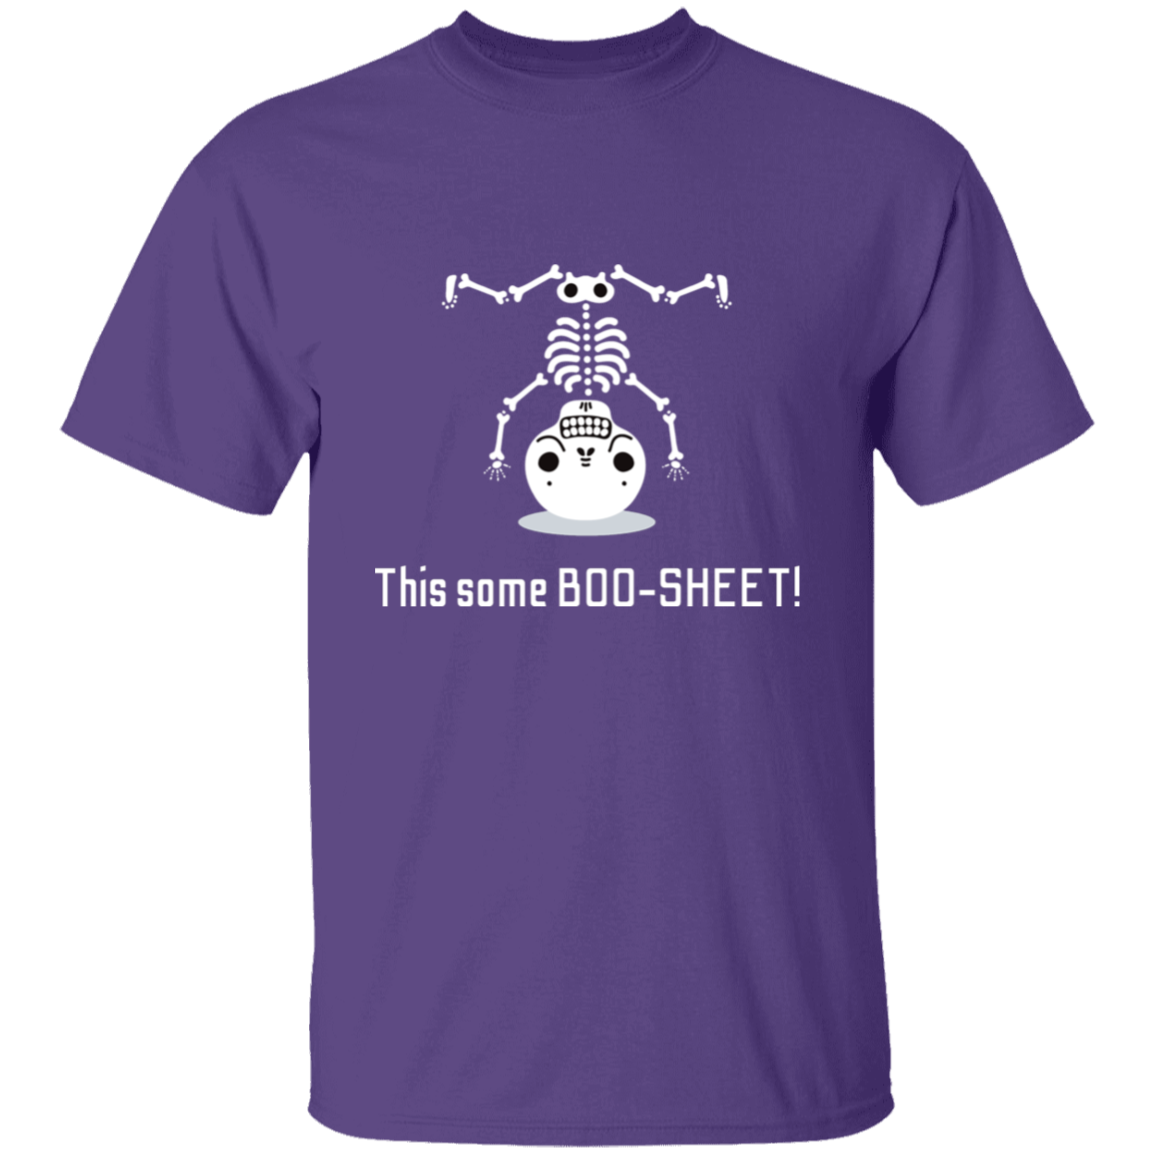 BOO-SHEET T shirt